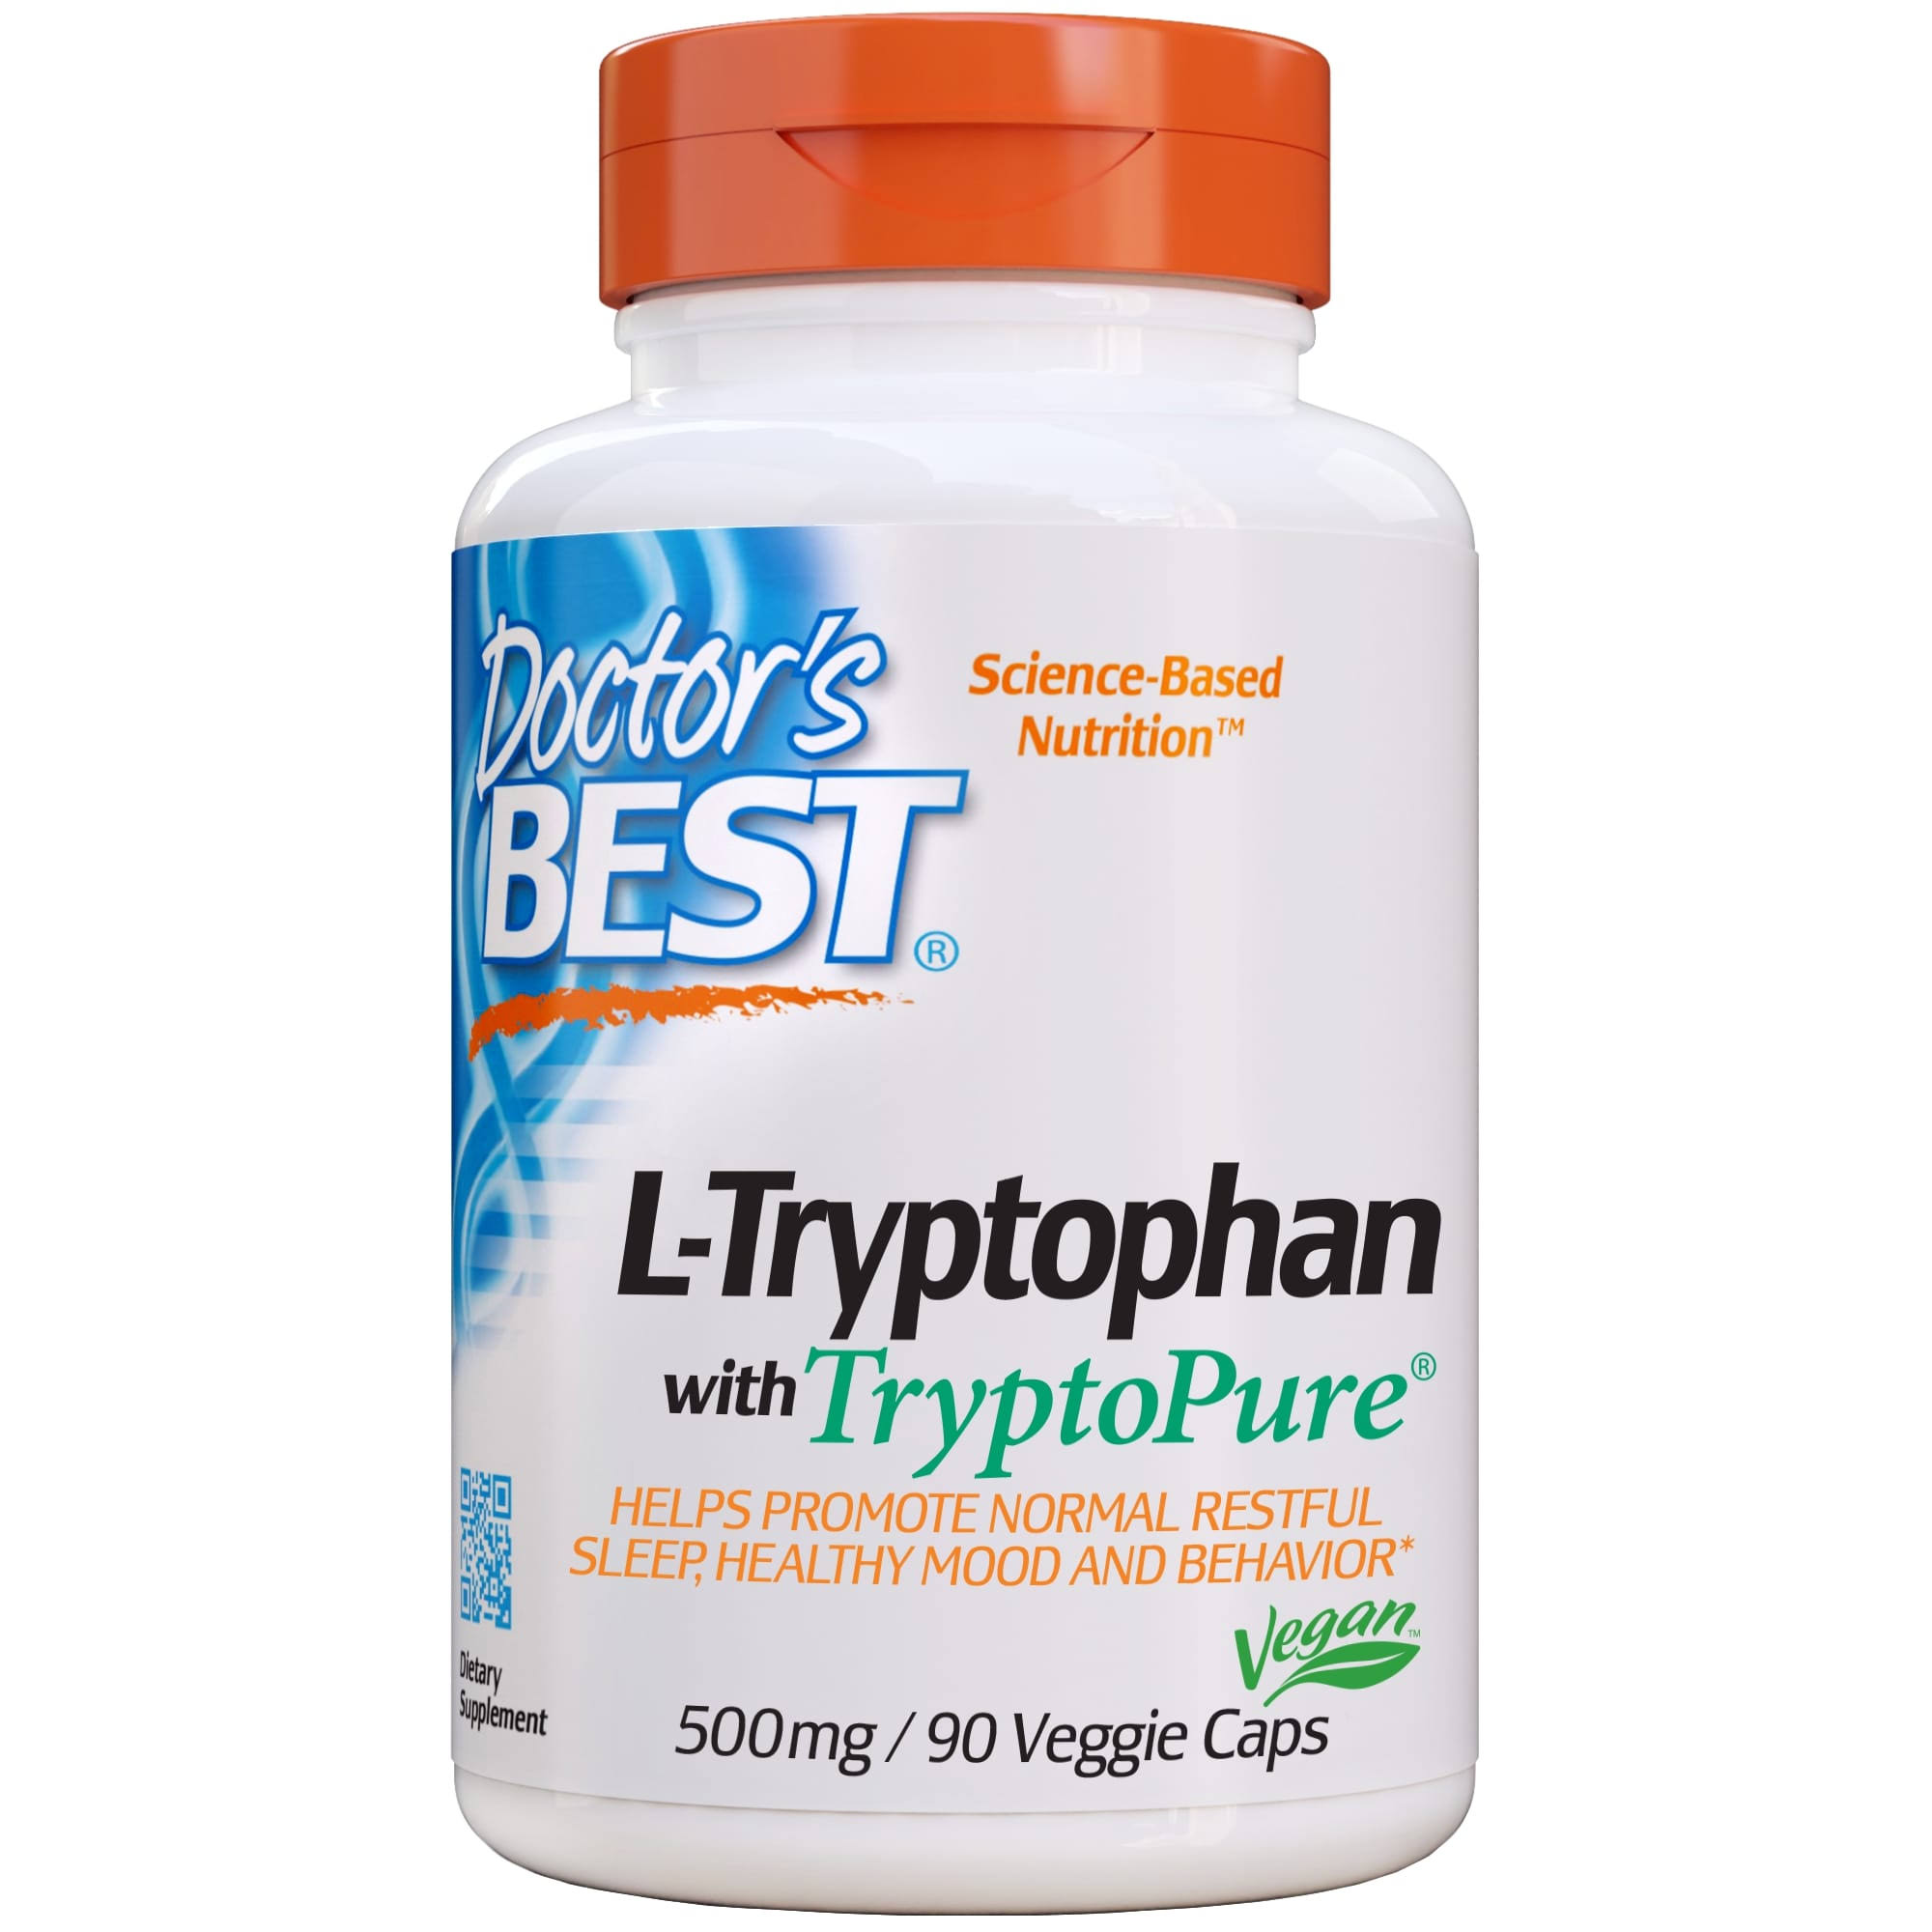 Doctor's Best Best L-Tryptophan Supplement - 500mg, 90 Veggie Capsules